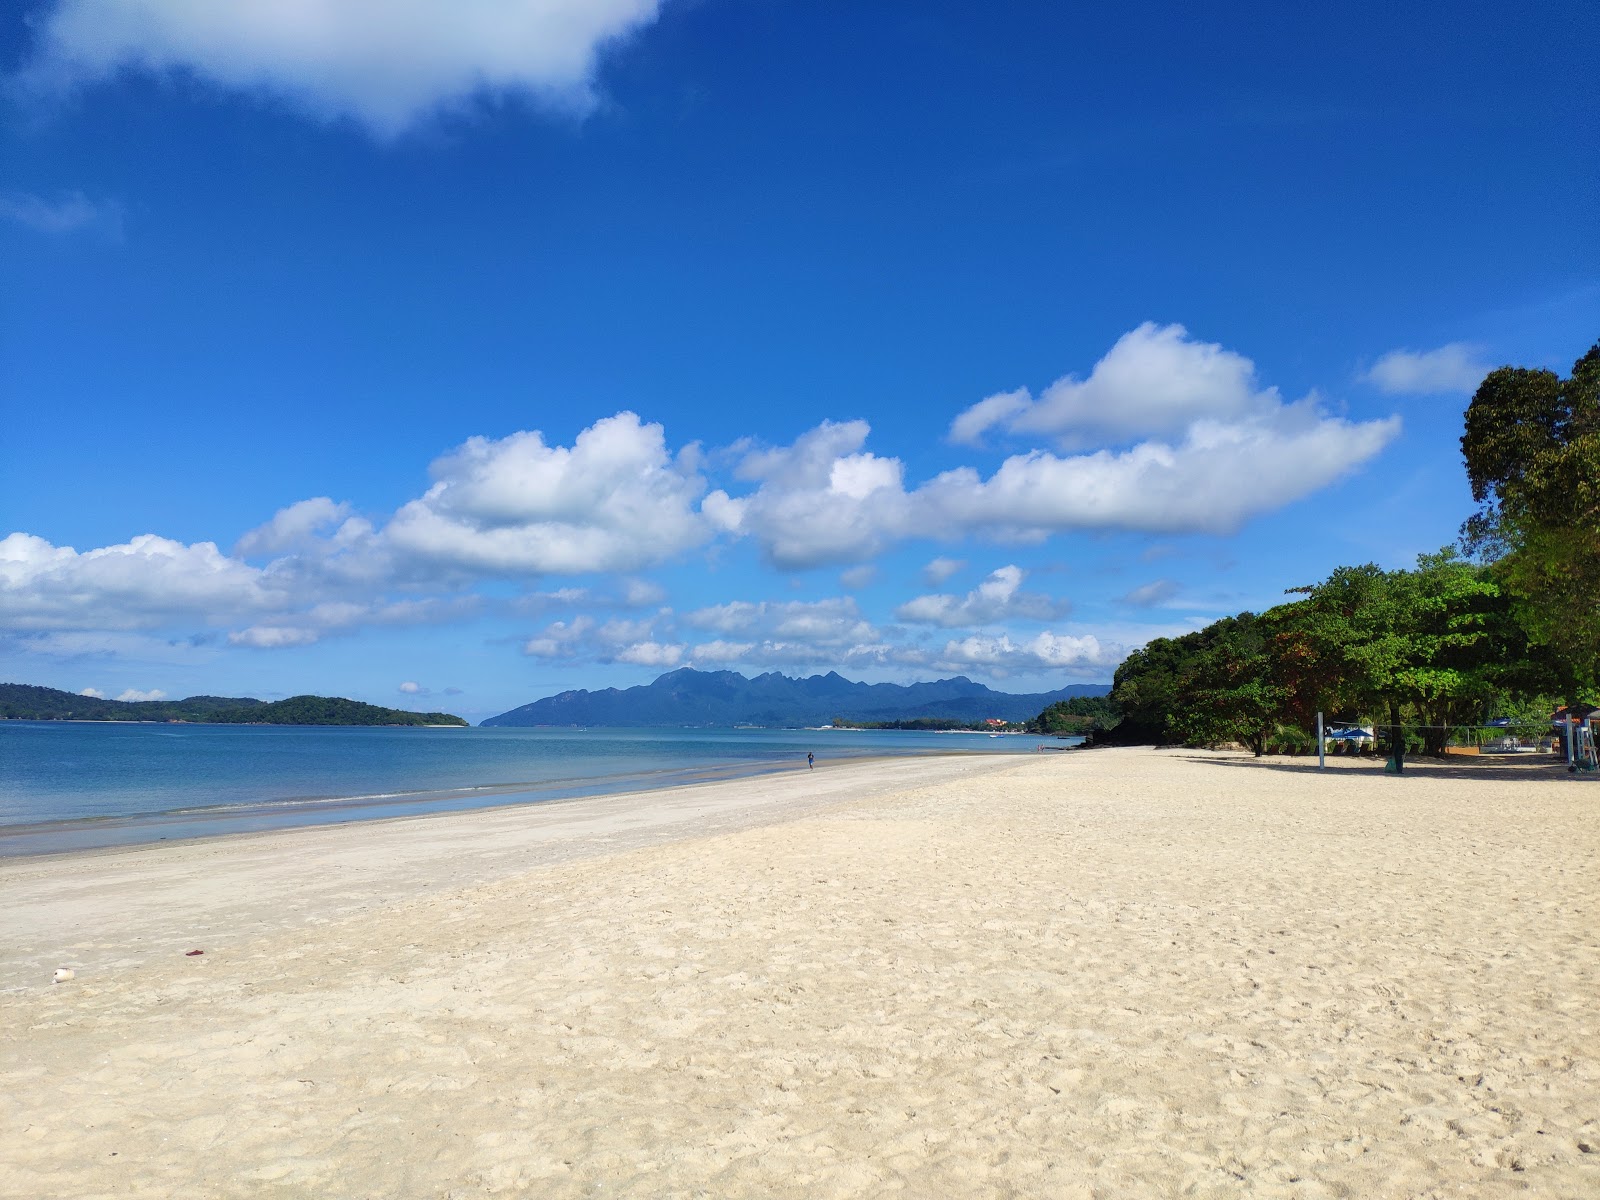 Photo of Tengah beach and its beautiful scenery